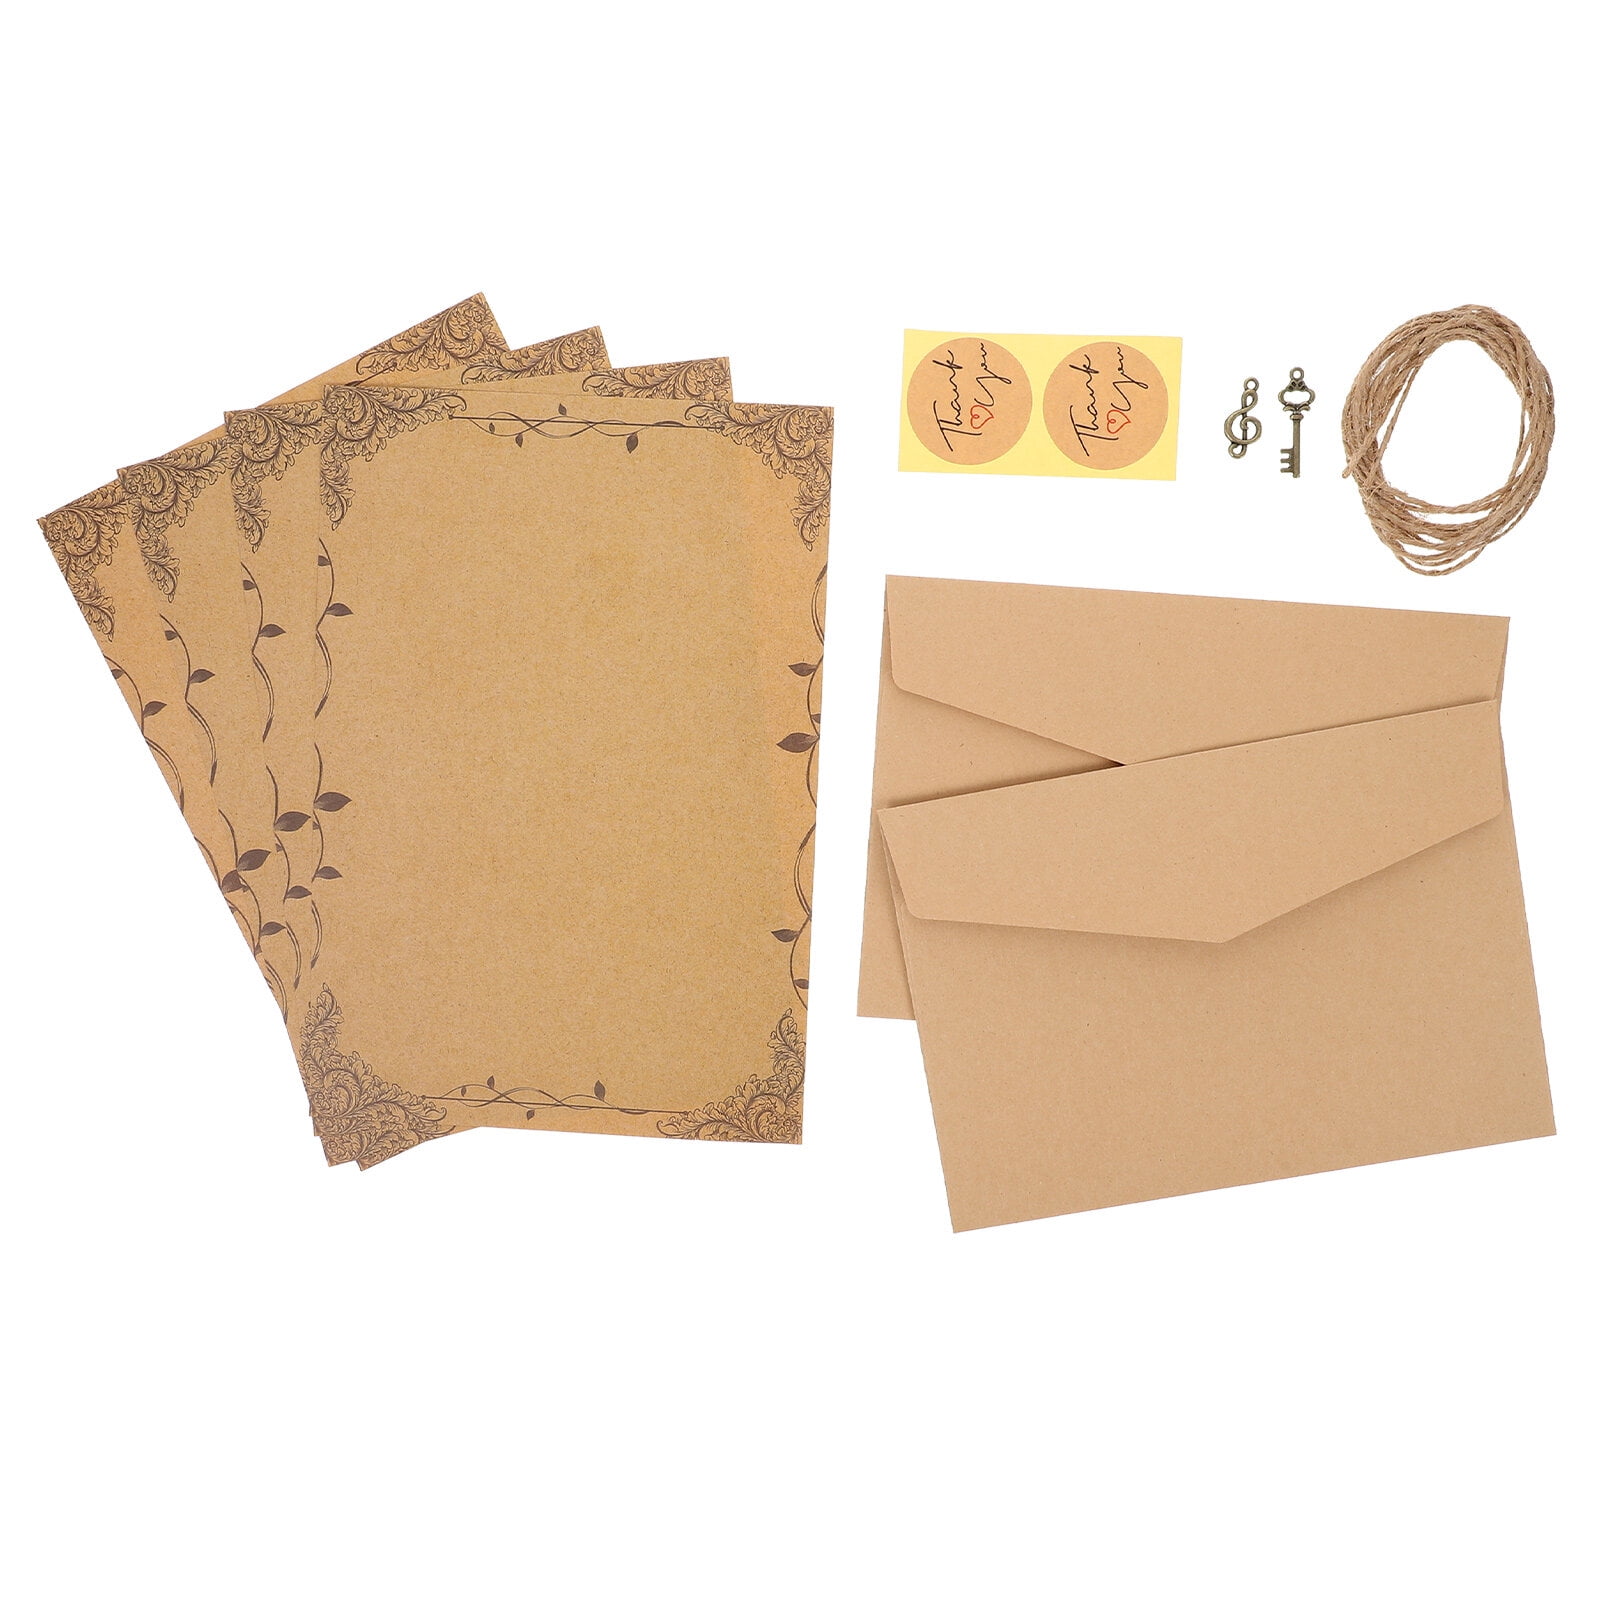 GRIRIW 3 Sets Vintage Stationery Envelope Student Writing Paper Letter  Writing Paper Antique Letter Papers Vintage Envelopes Brown Paper Bags  Envelope